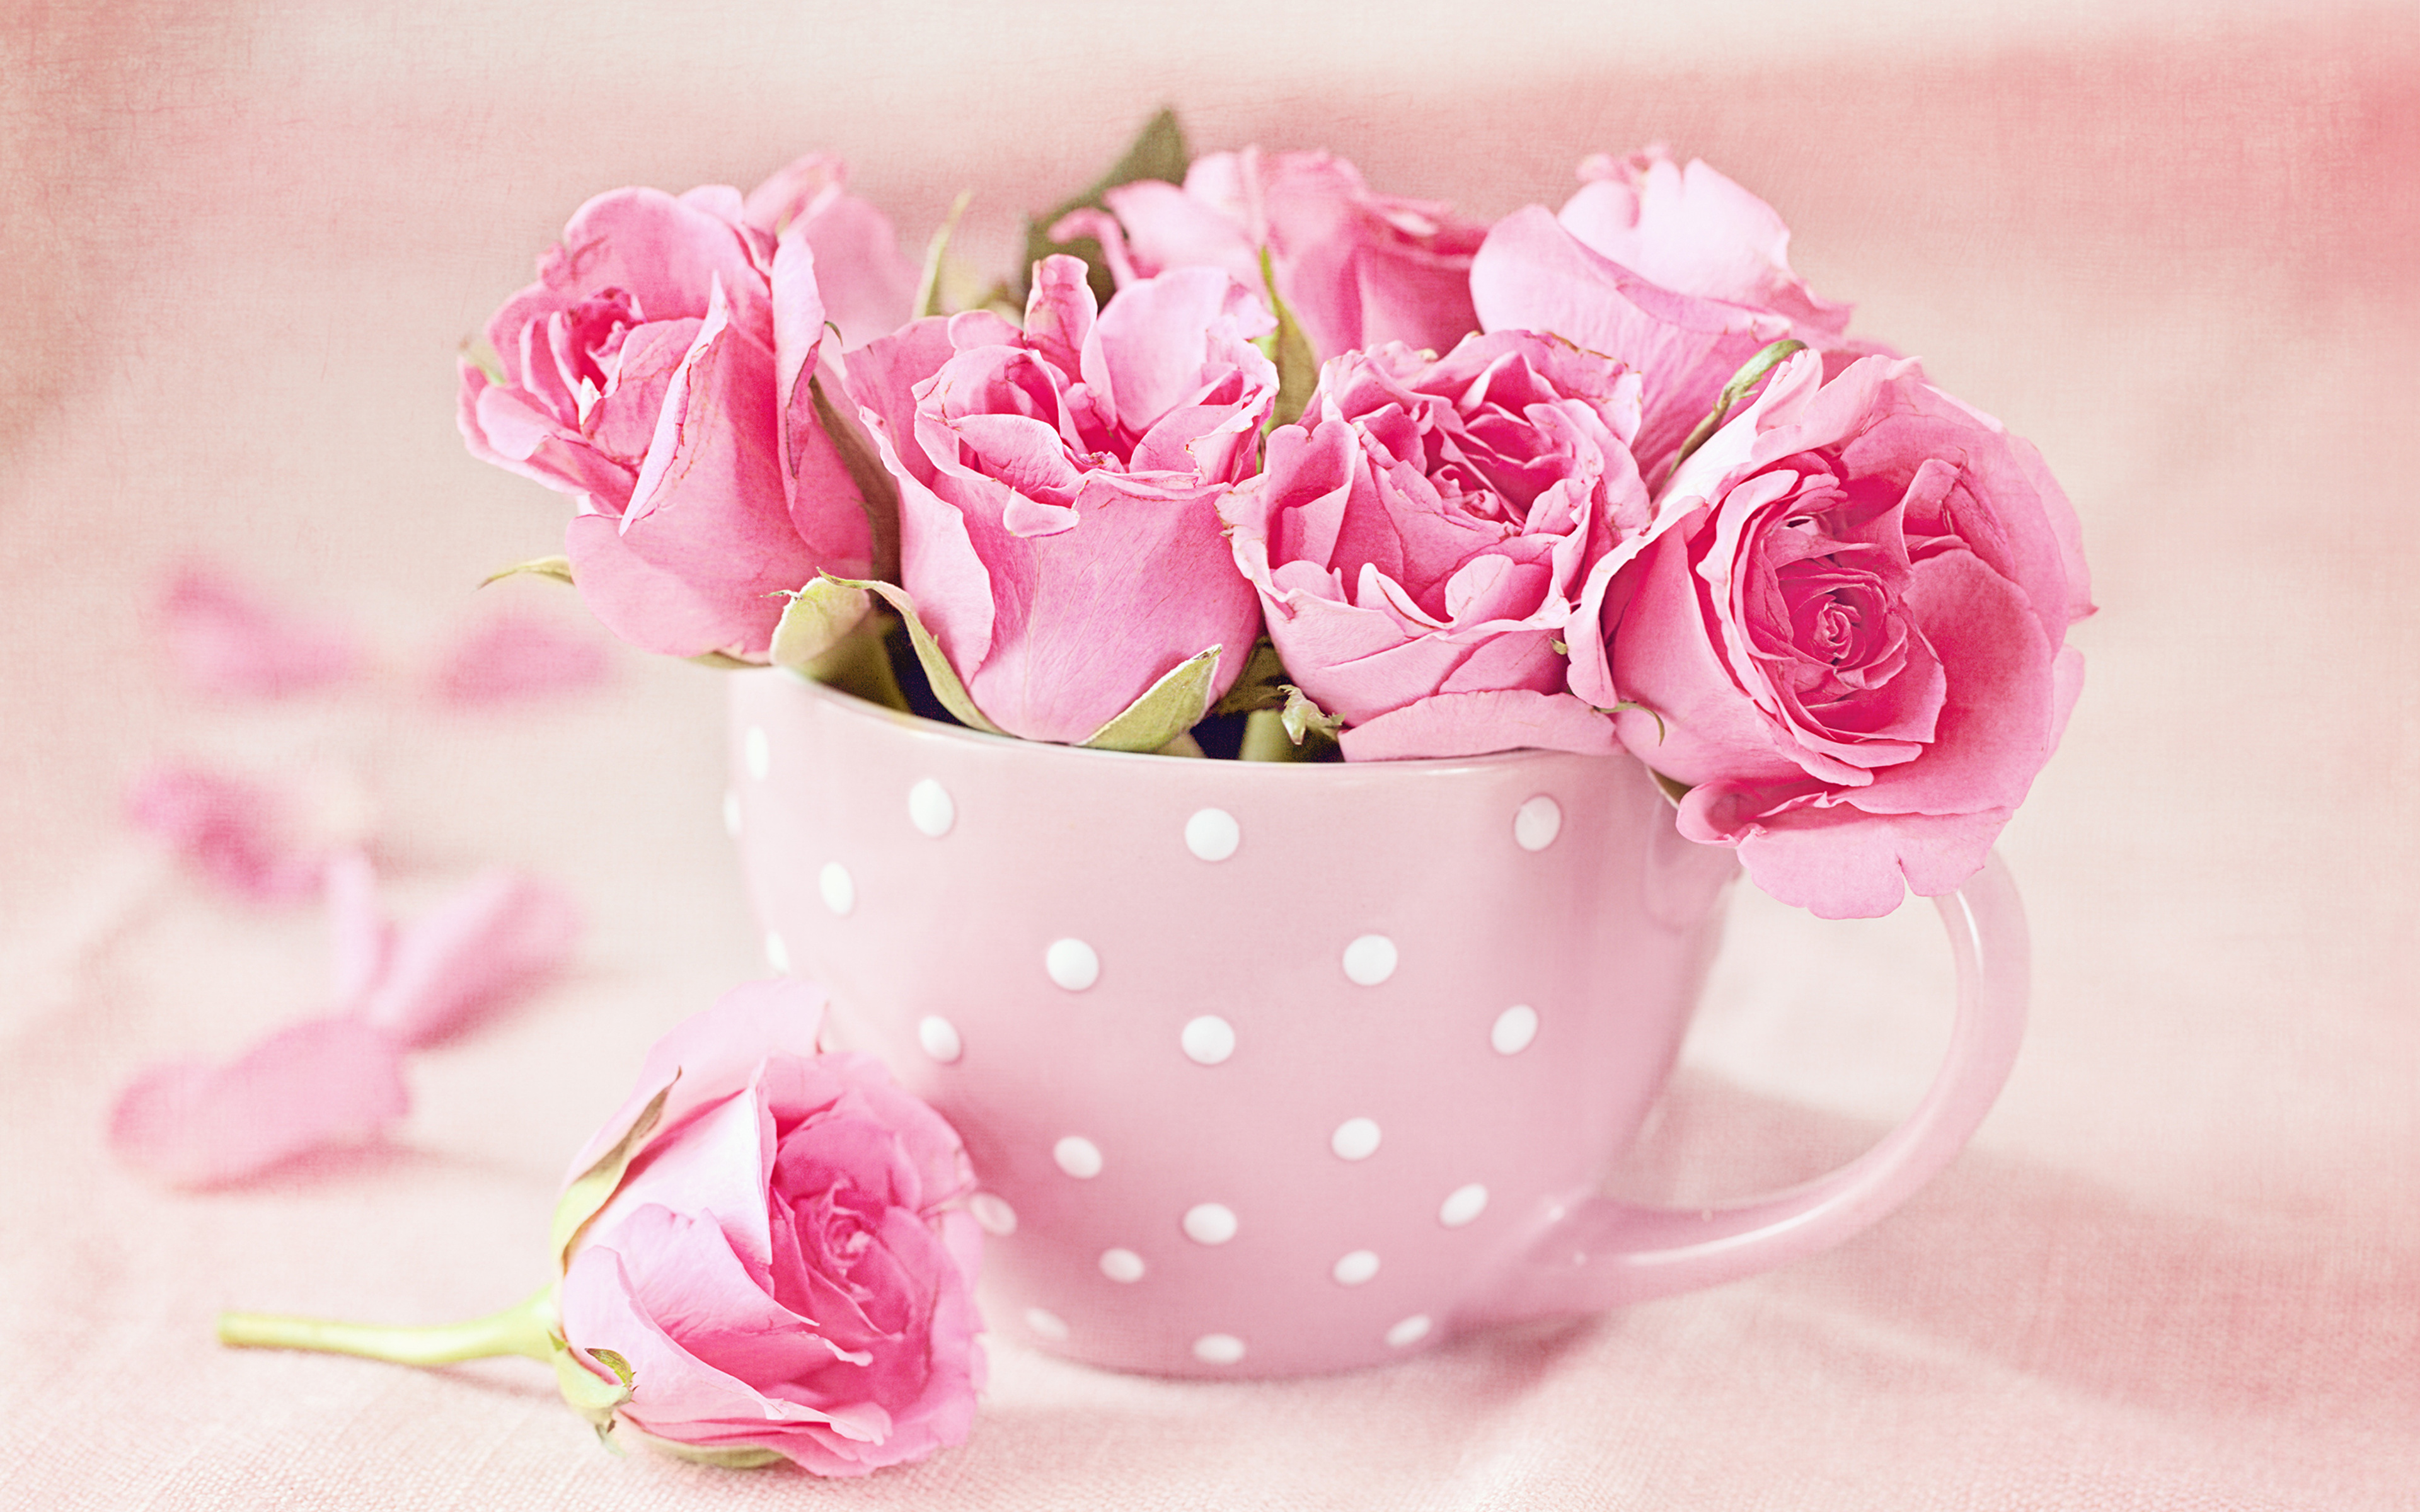 Roses_Pink_color_Mug_457558_3840x2400.jpg